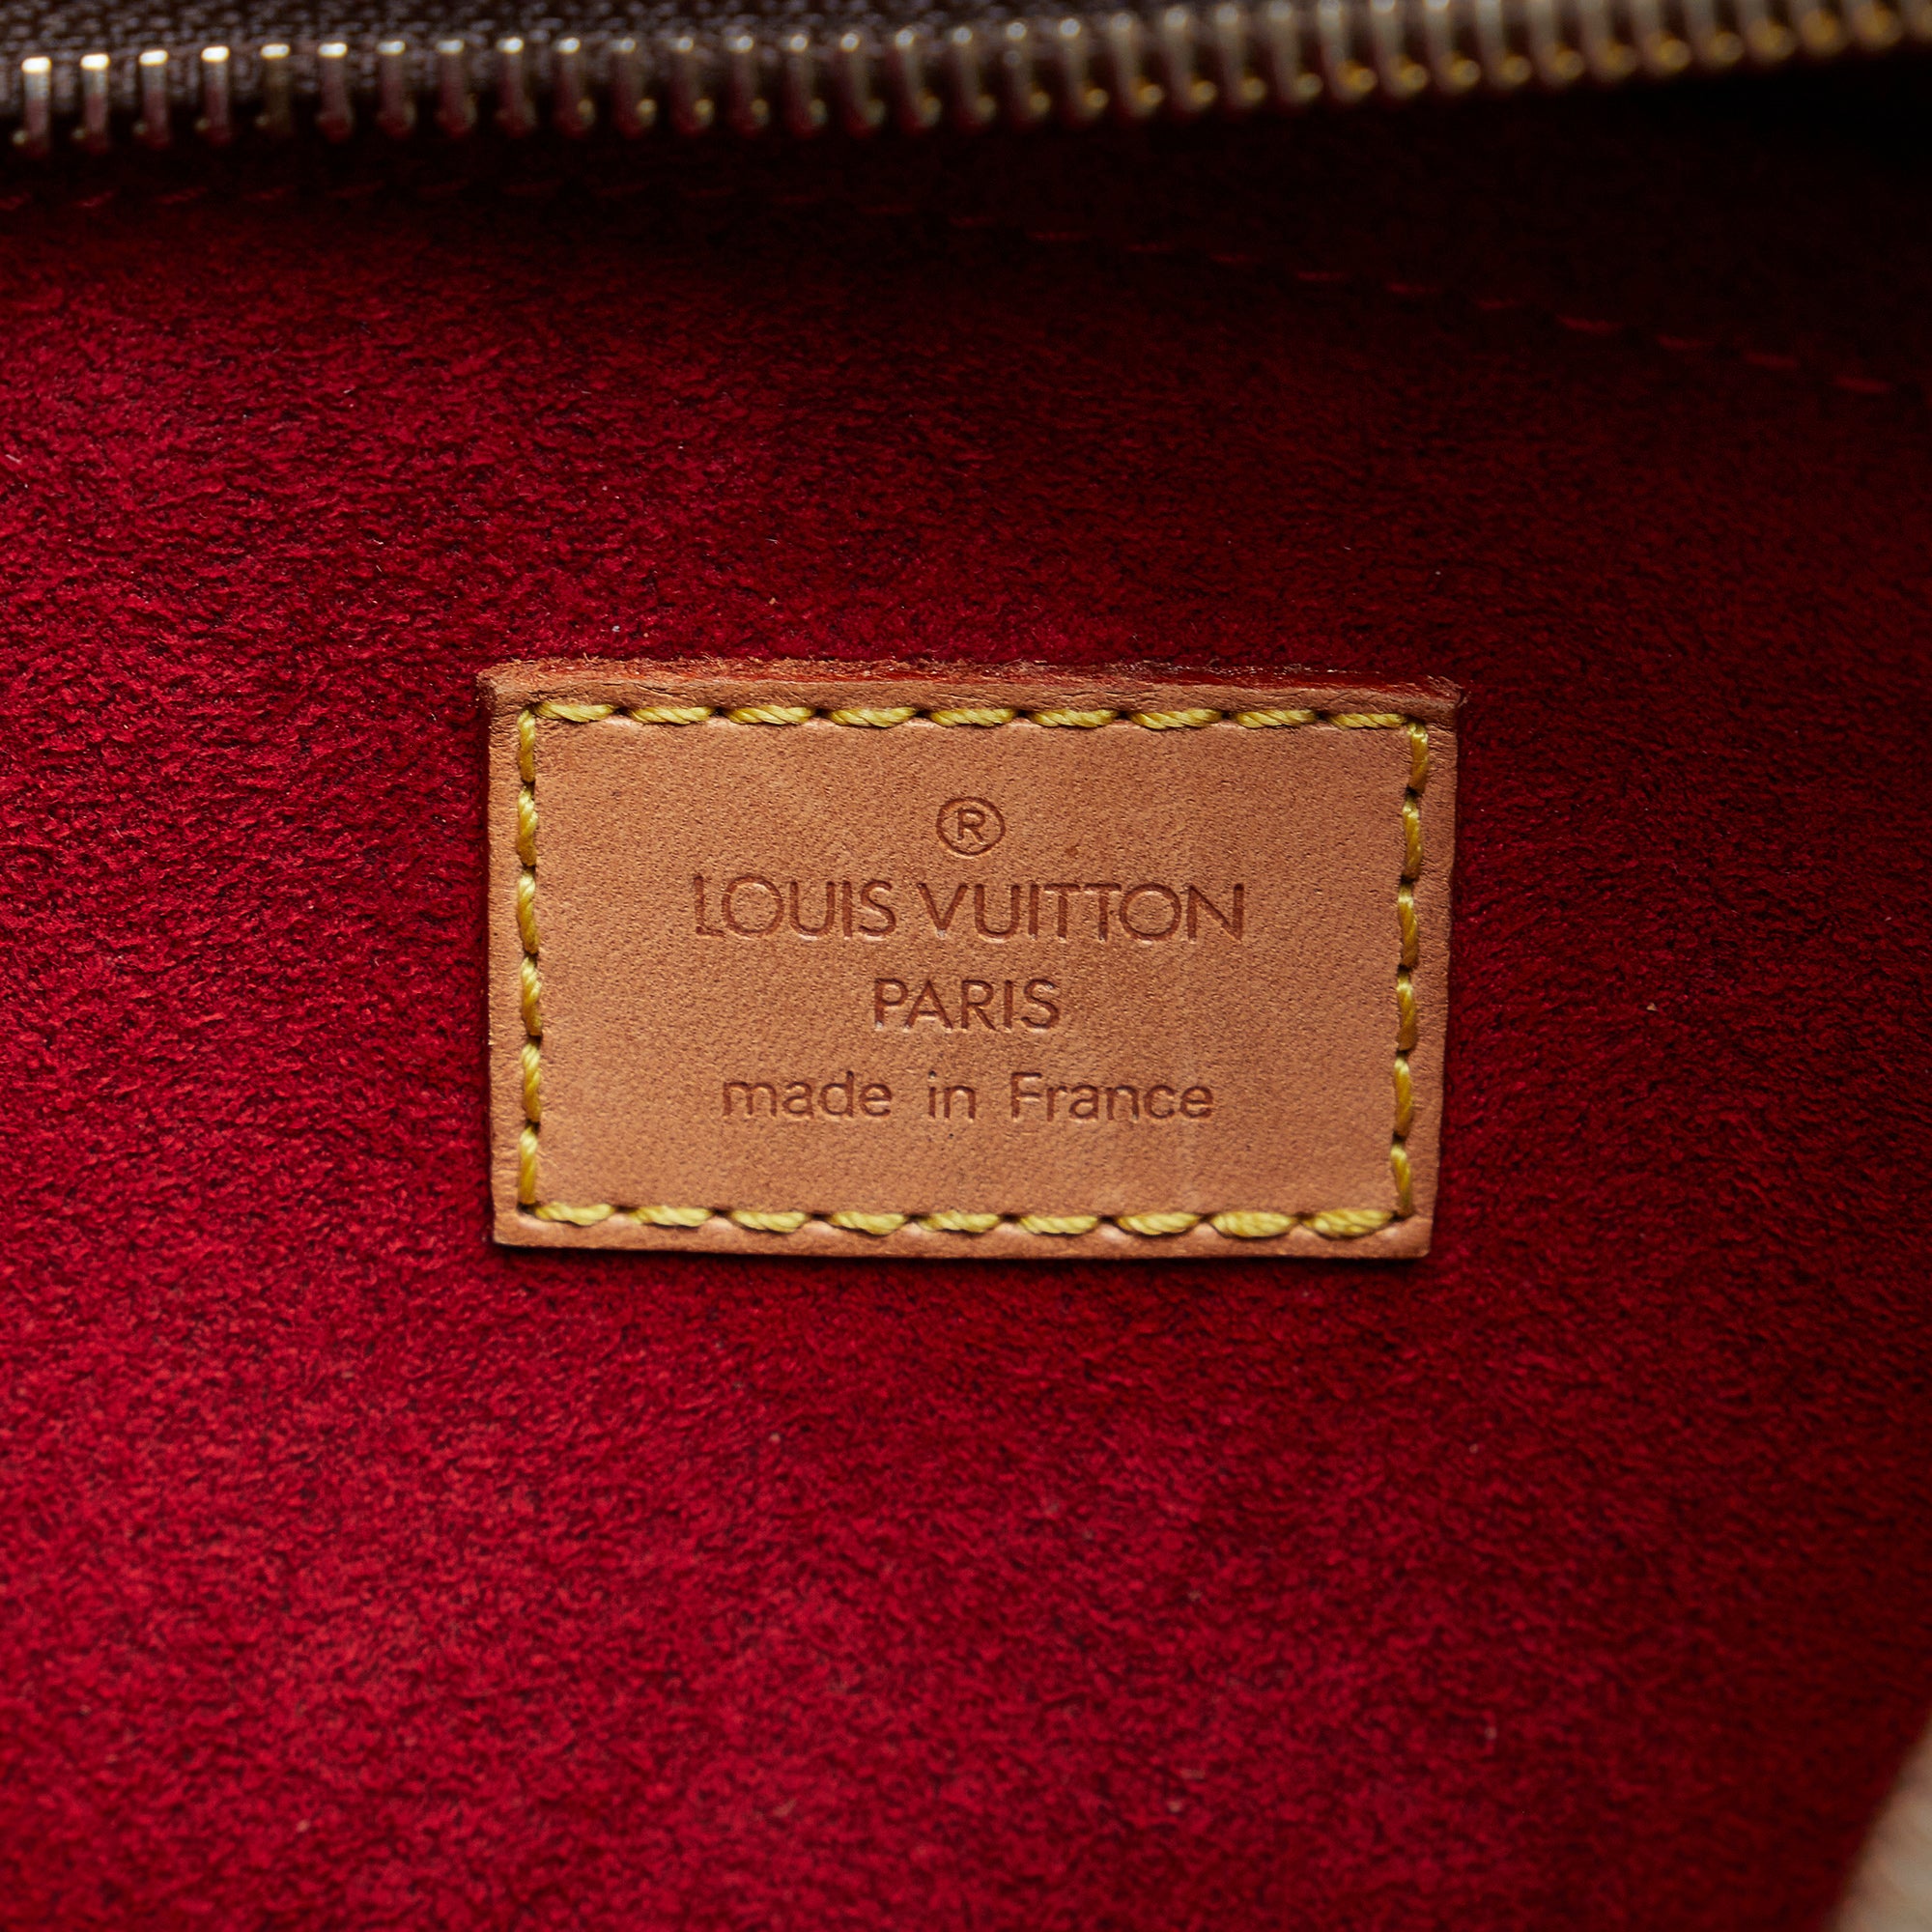 Date Code & Stamp] Louis Vuitton Croissant Monogram Canvas